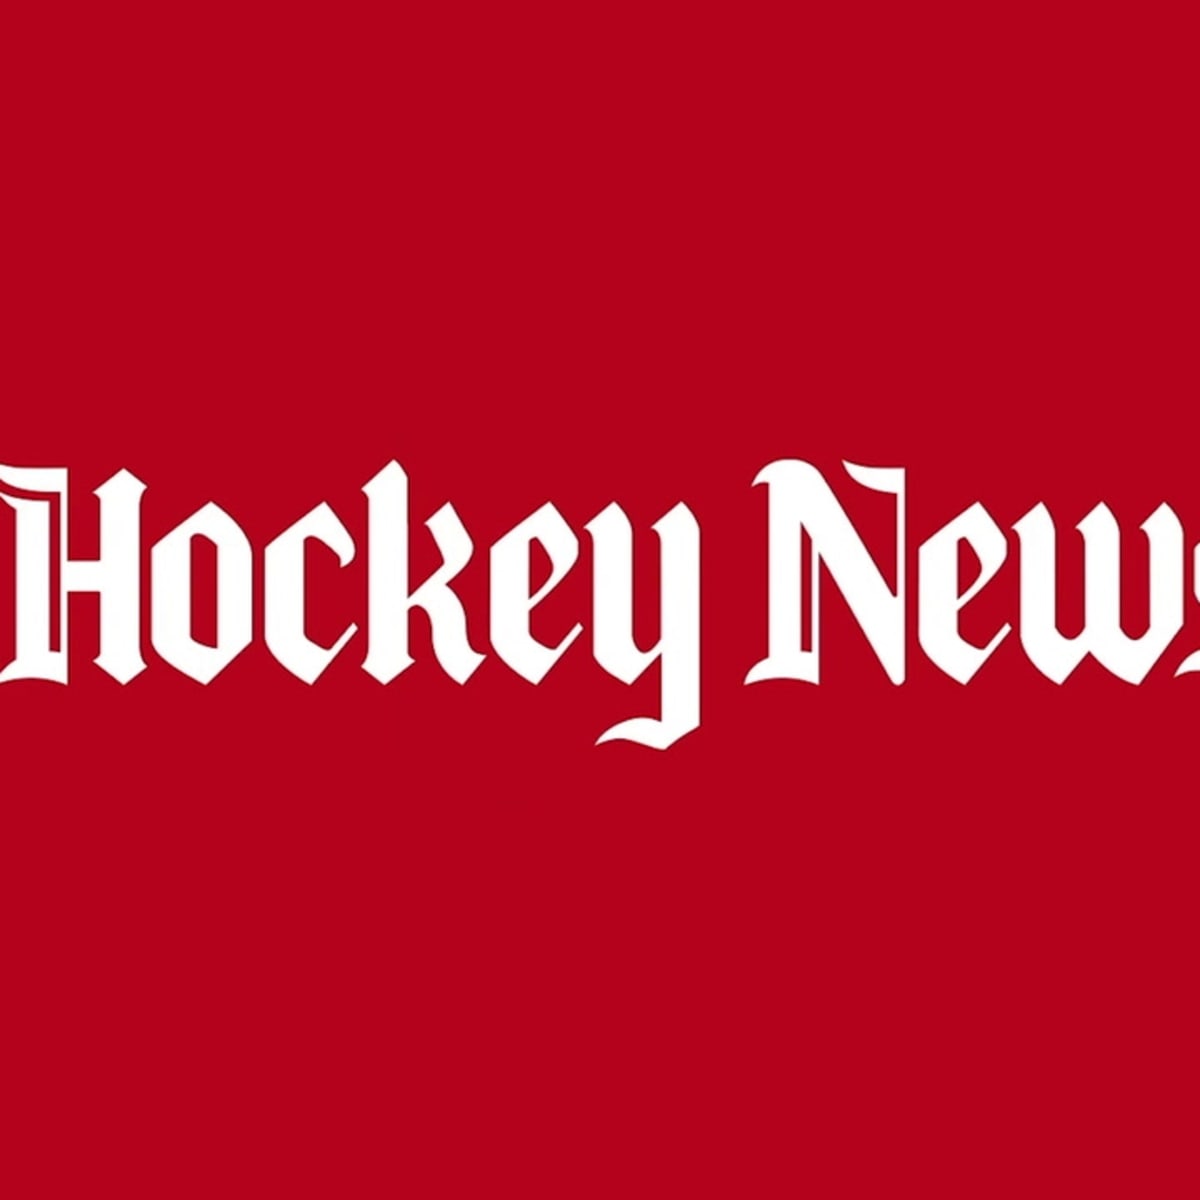 Blue Jackets sign top NHL free-agent, “Johnny Hockey”